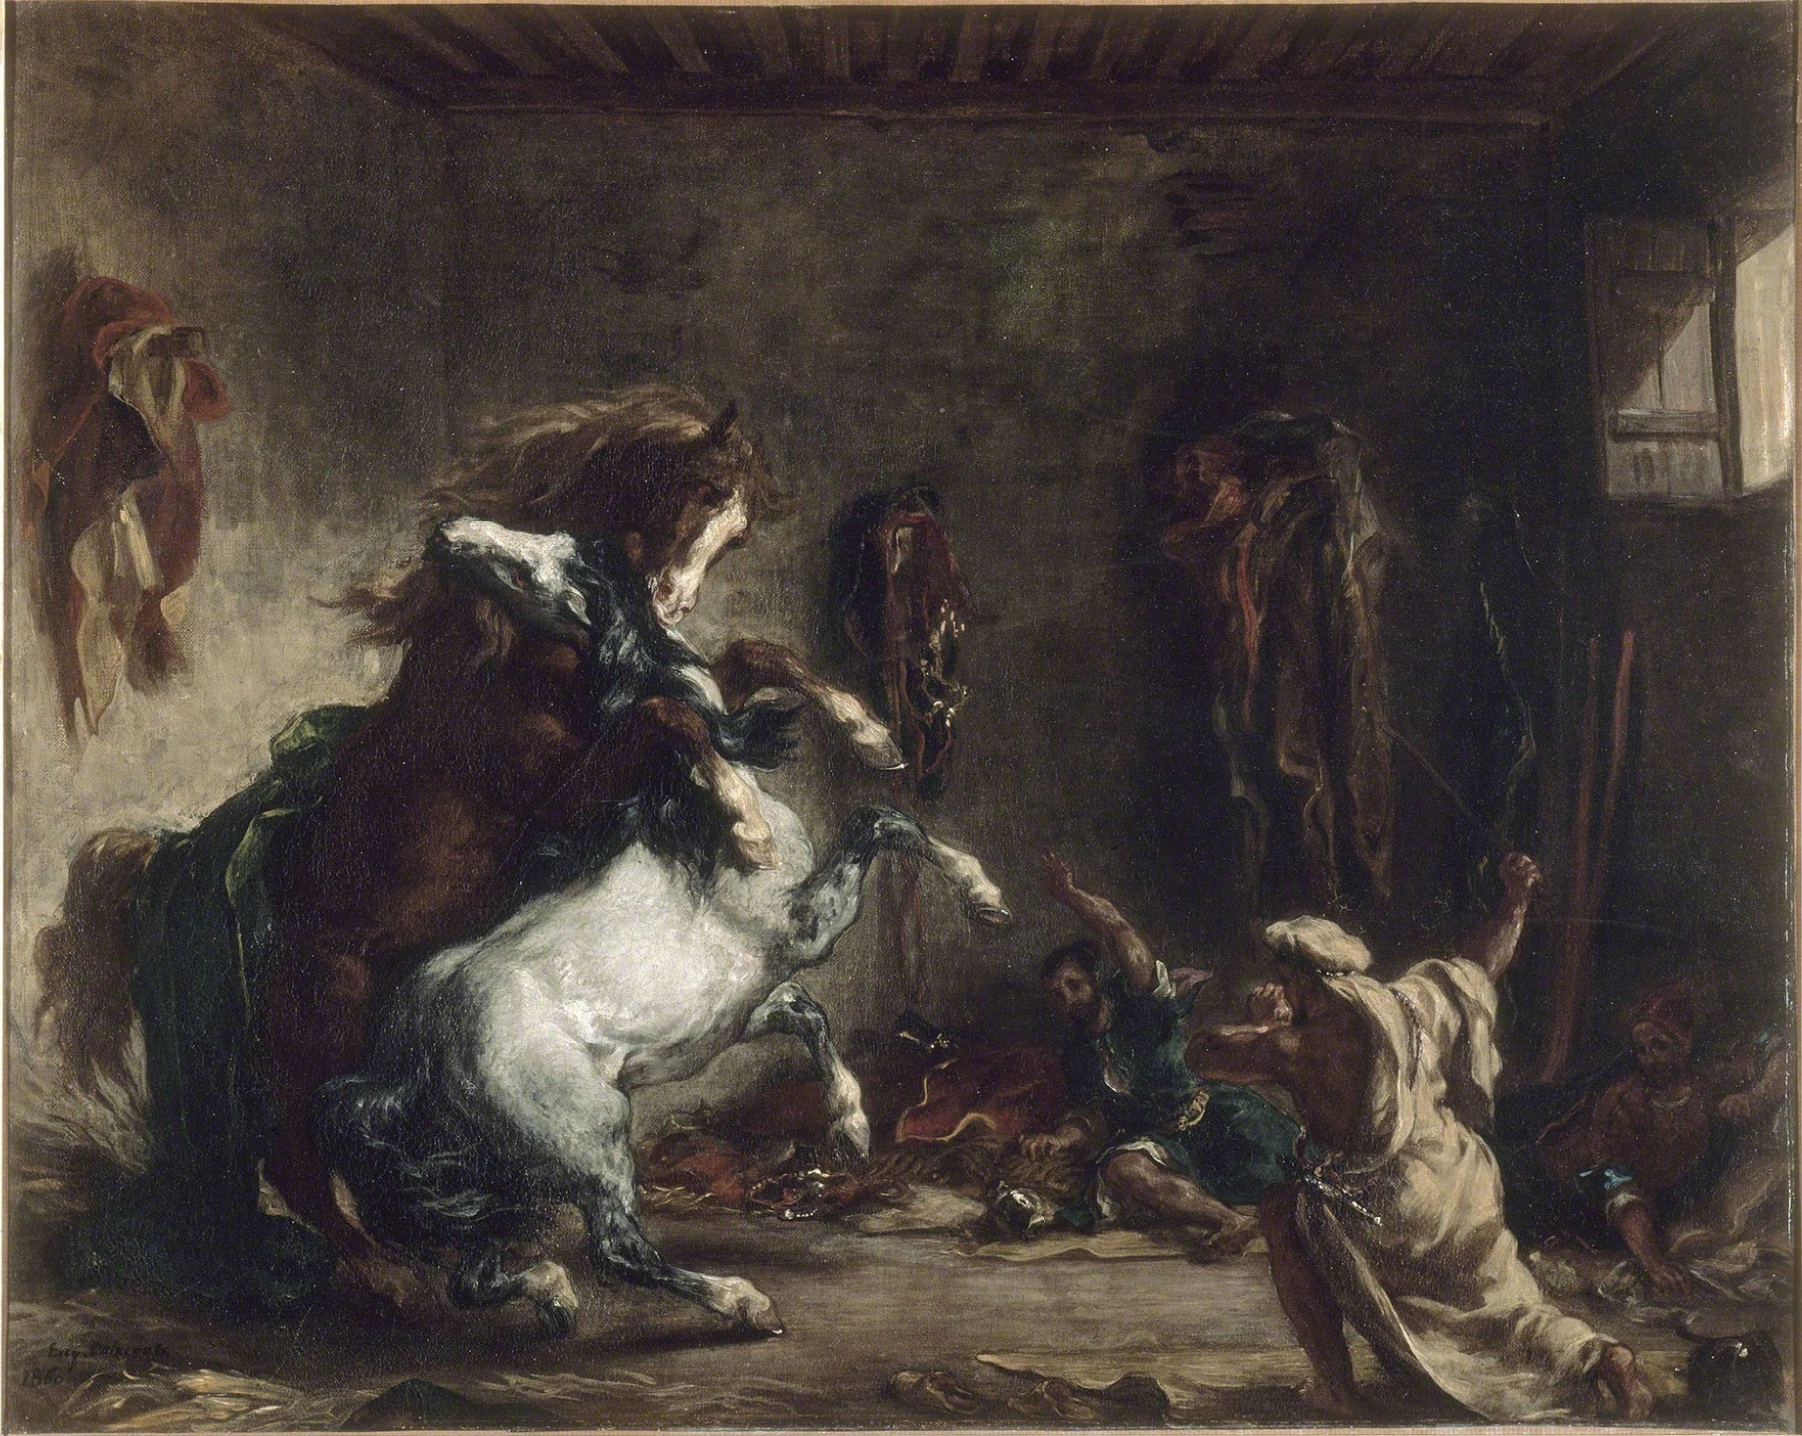 Arab Horses Fighting in a Stable, Eugène Delacroix